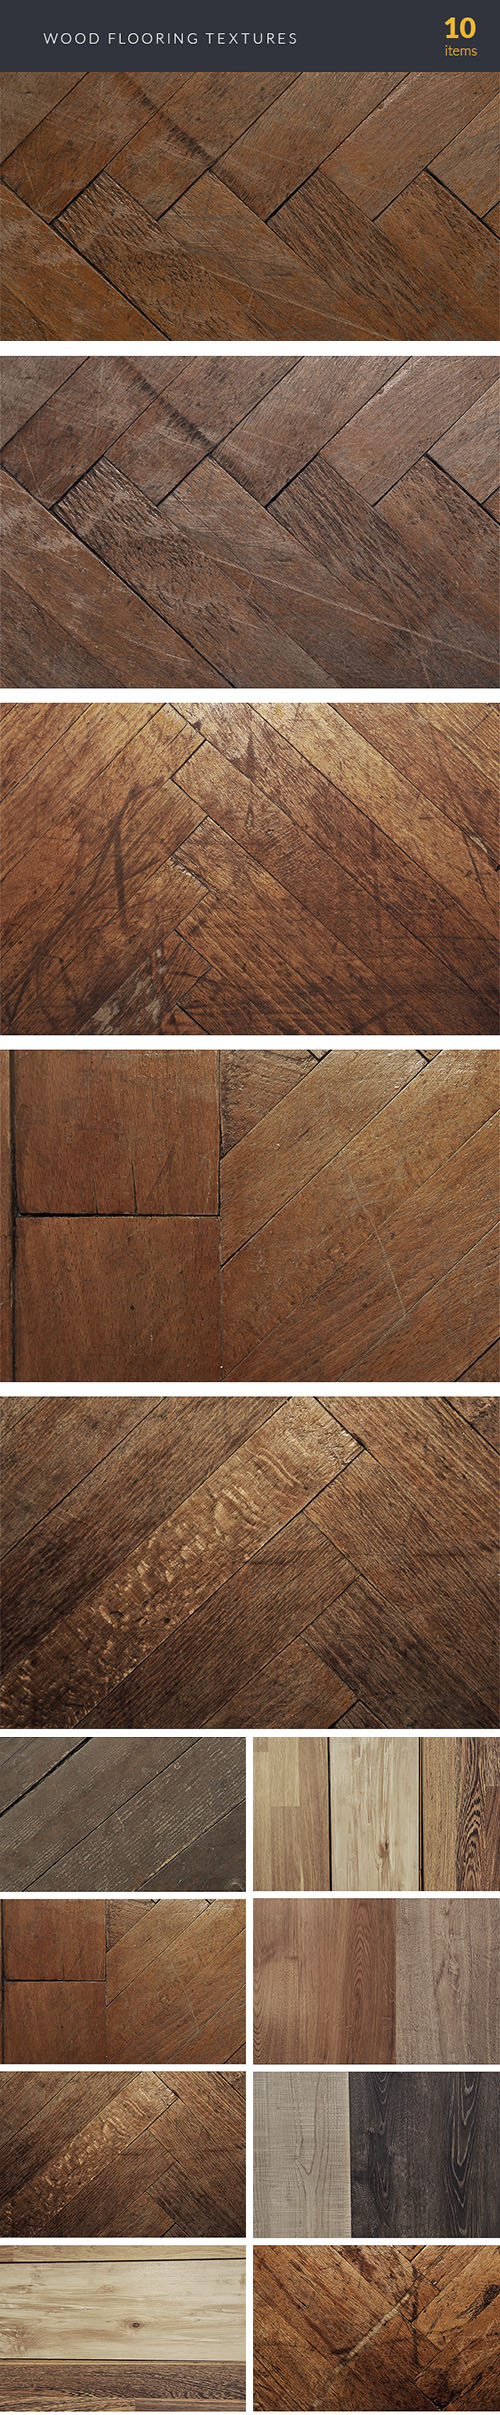 Designtnt - Plywood Textures Set 1